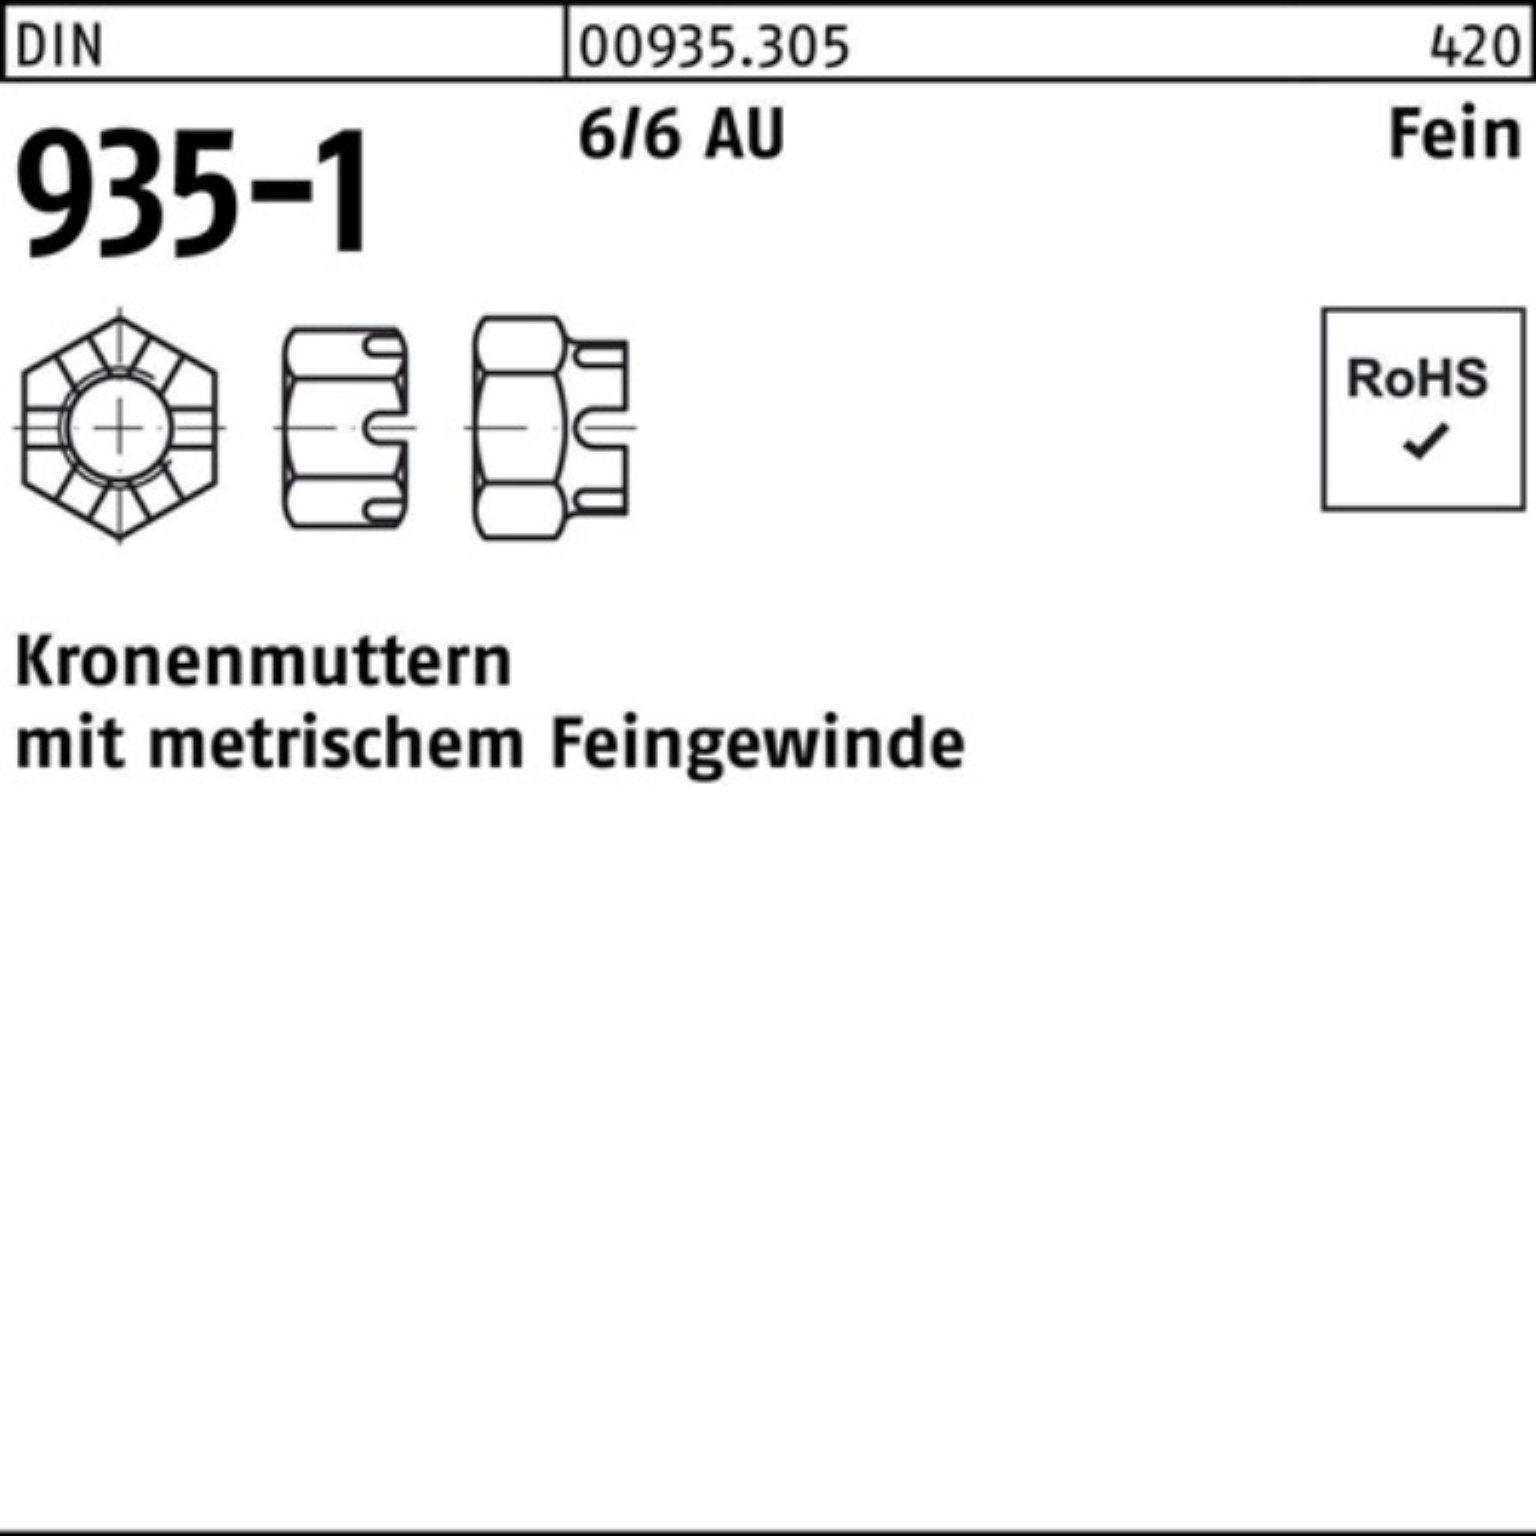 Reyher Kronenmutter 100er Pack Kronenmutter DIN 935-1 M39x 3 6 1 Stück DIN 935-1 6 Fein K